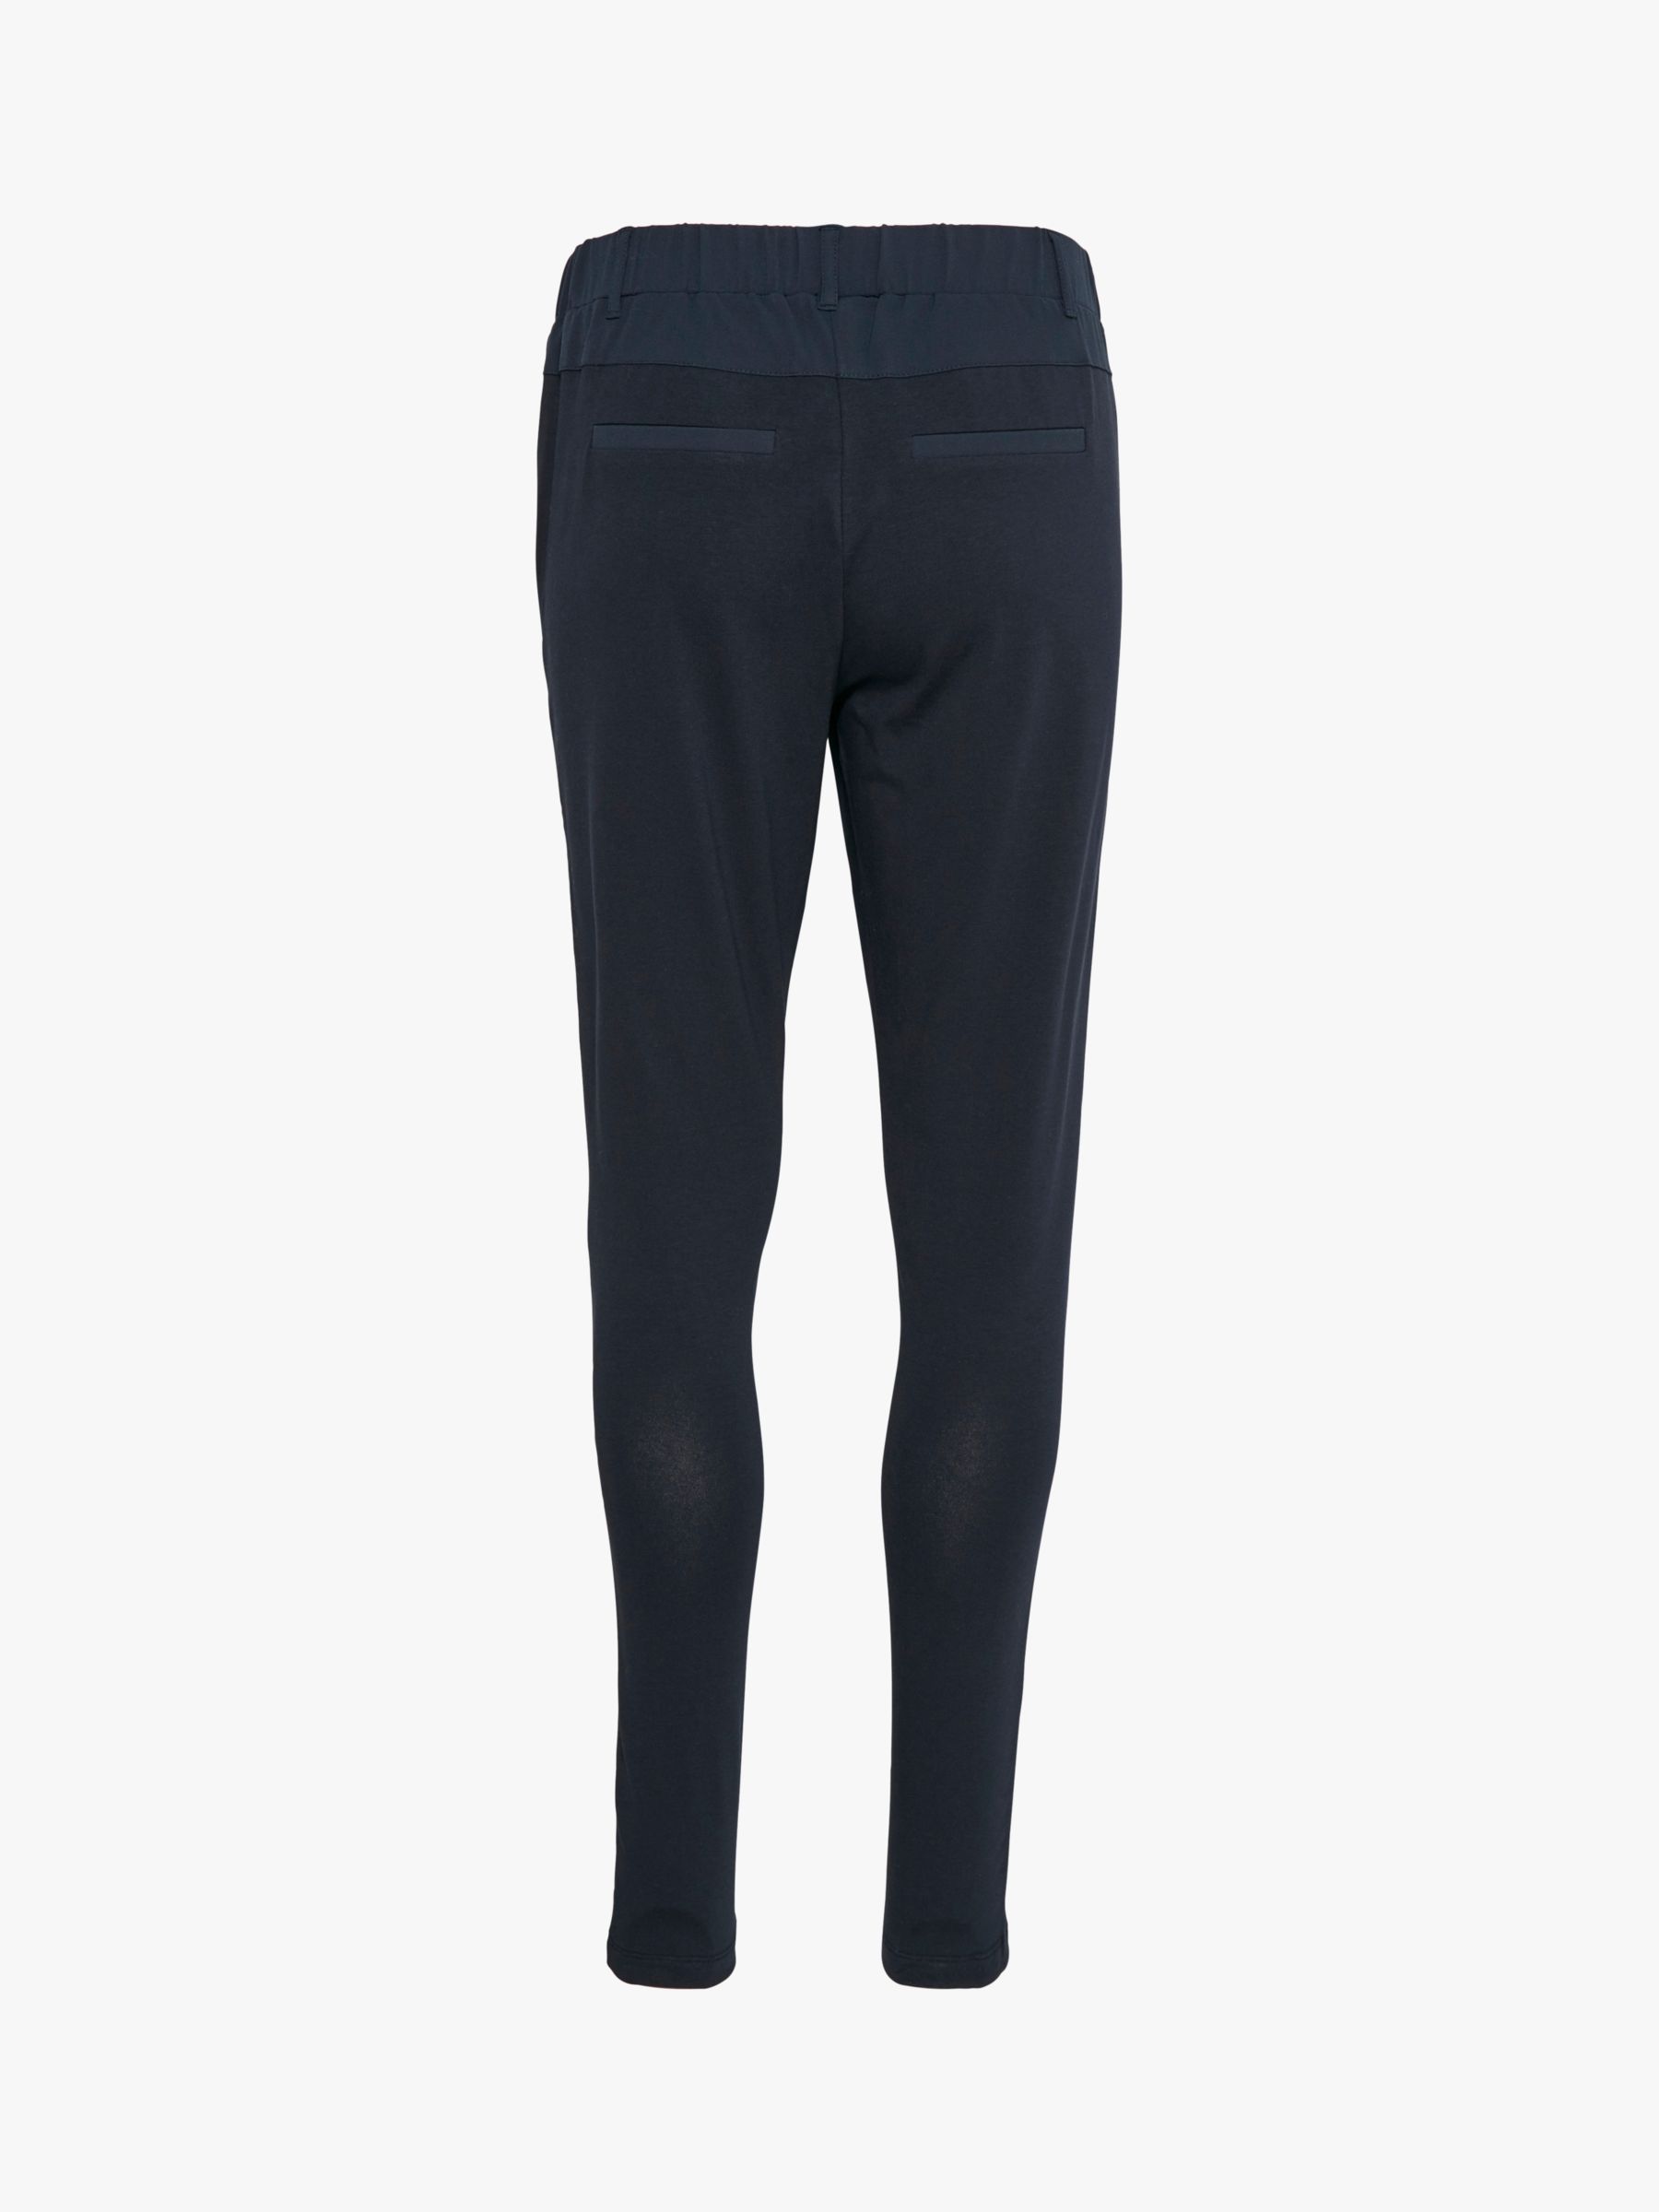 Buy KAFFE Women's Trousers, Midnight Marine Online at johnlewis.com